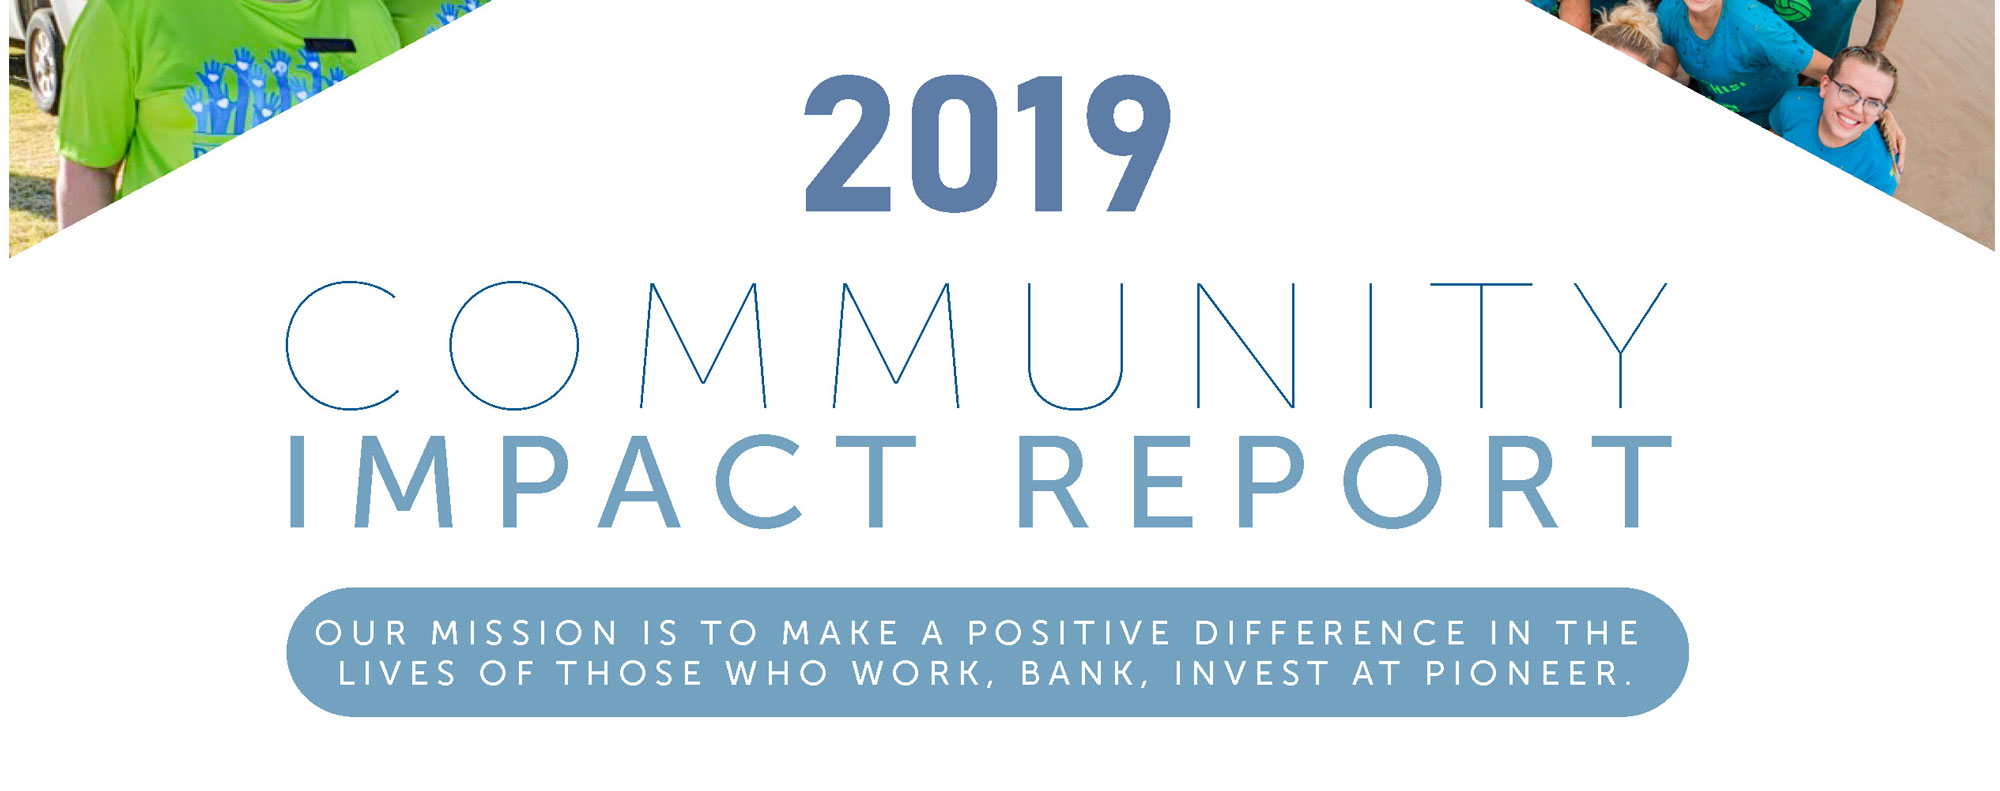 2019 community impact report header